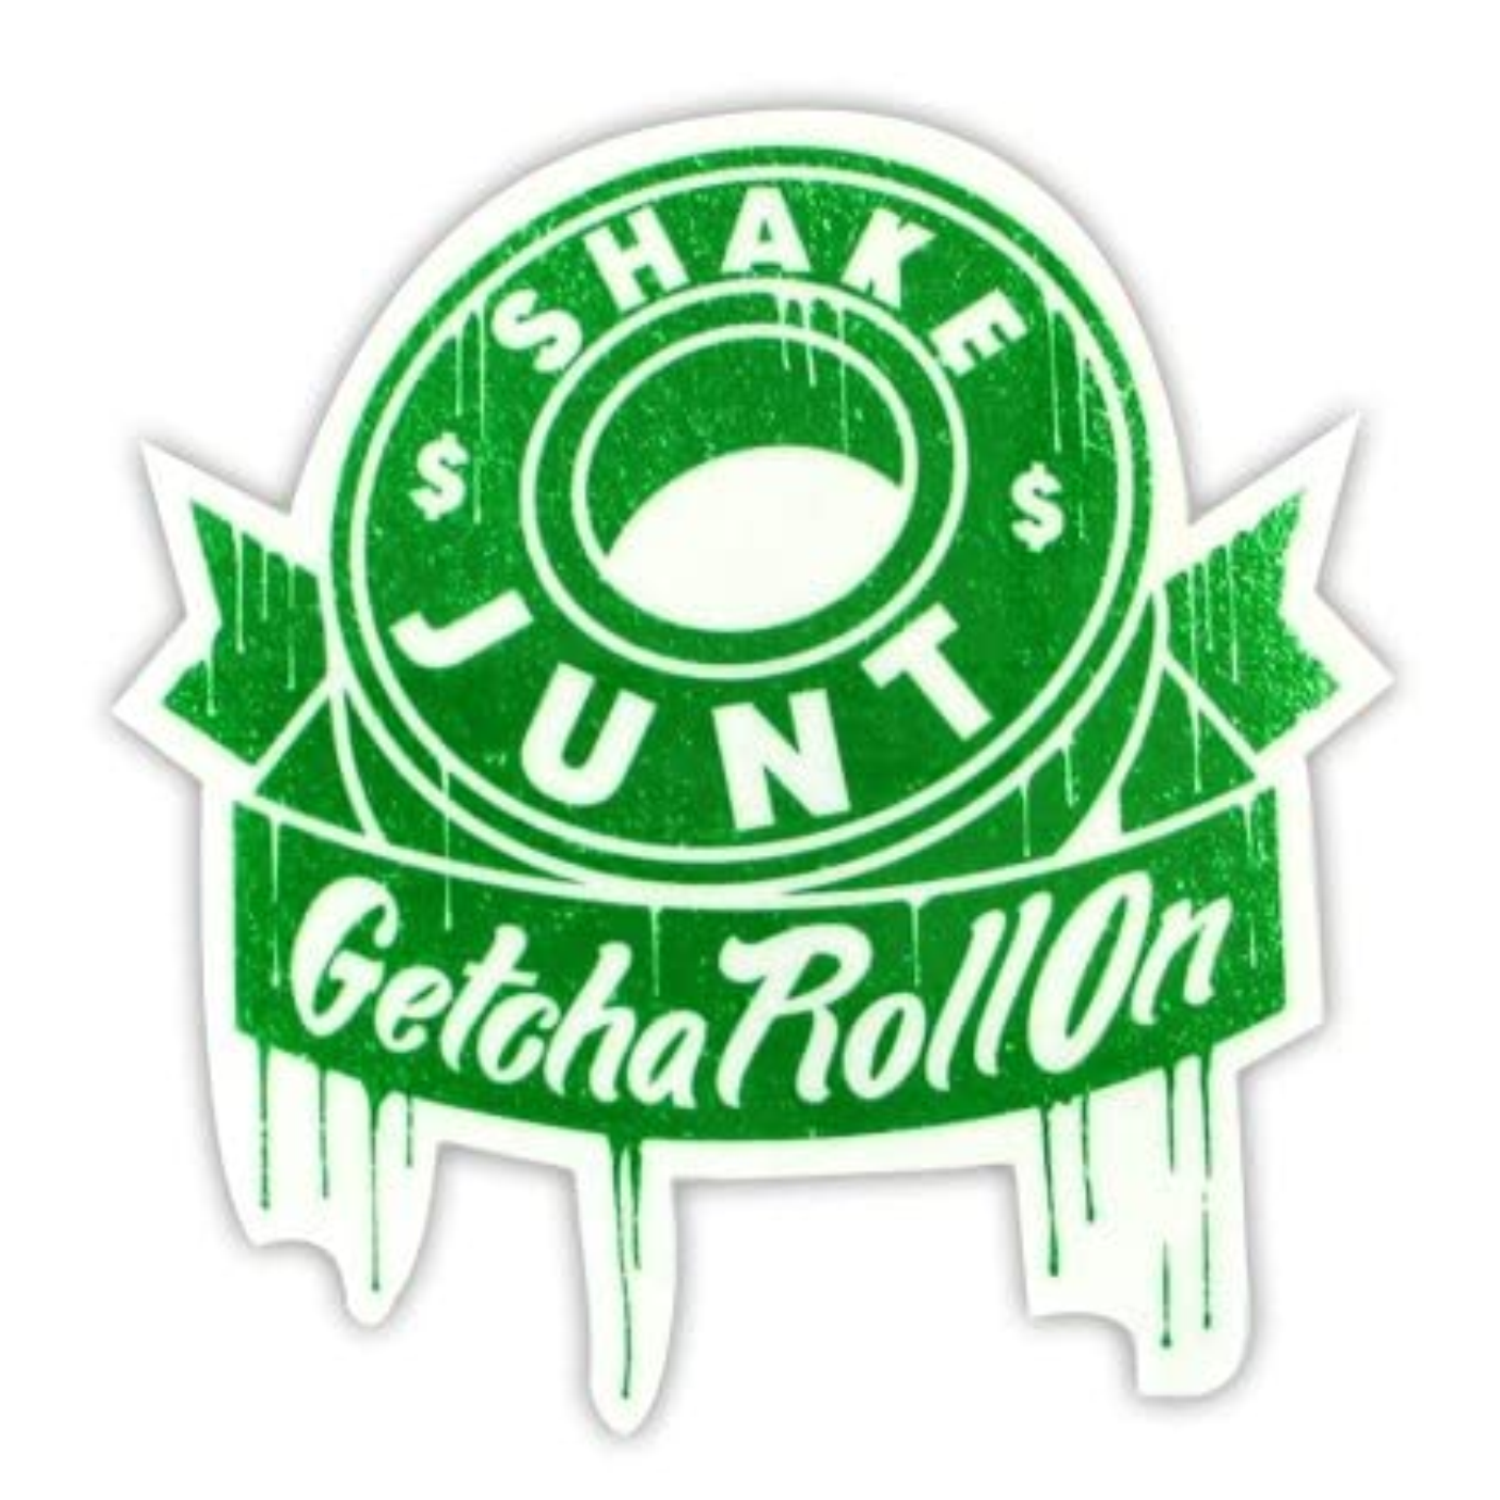 Sticker Shake Junt - Getcha Roll On green